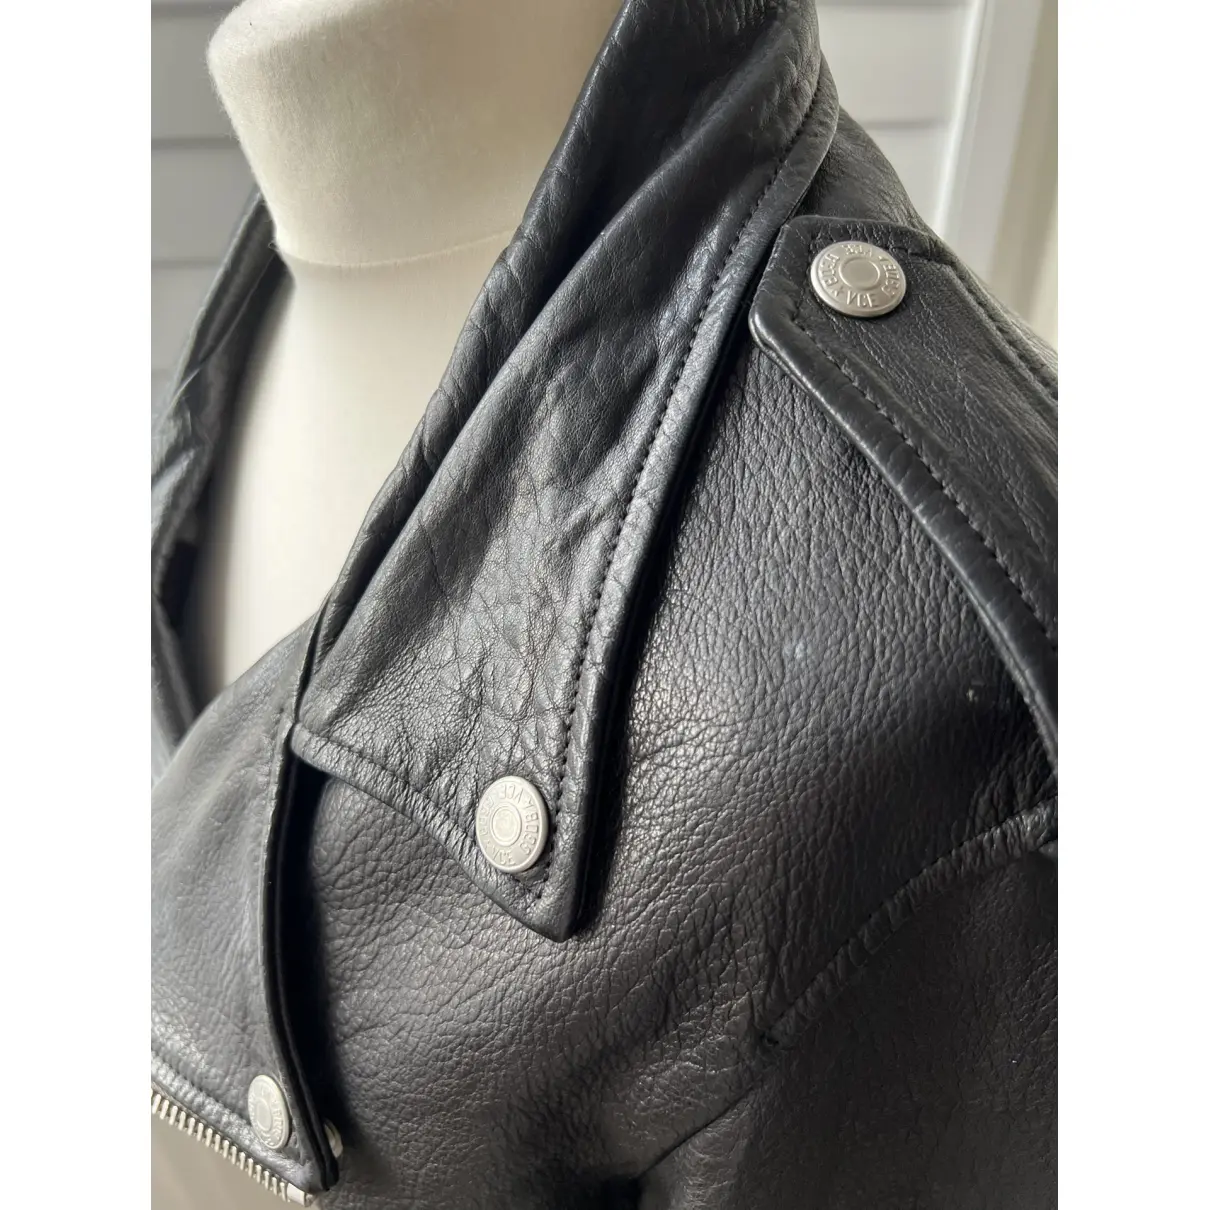 Buy Golden Goose Leather jacket online